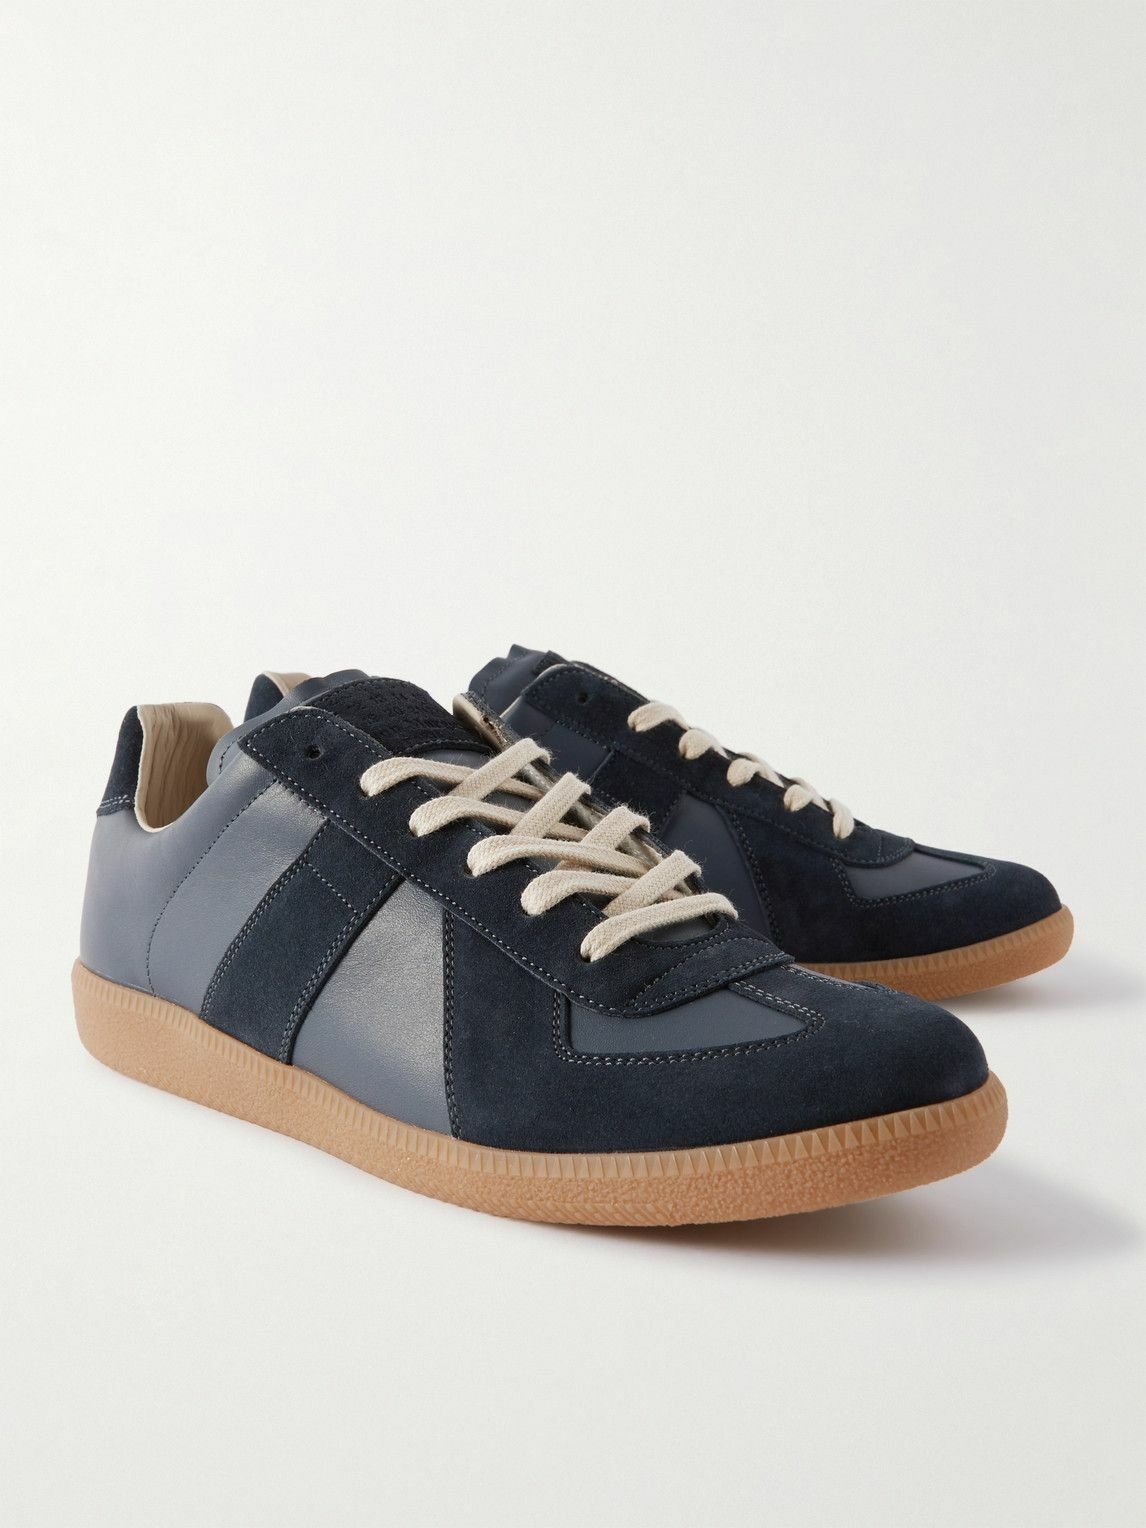 Maison Margiela - Replica Leather and Suede Sneakers - Blue Maison Margiela